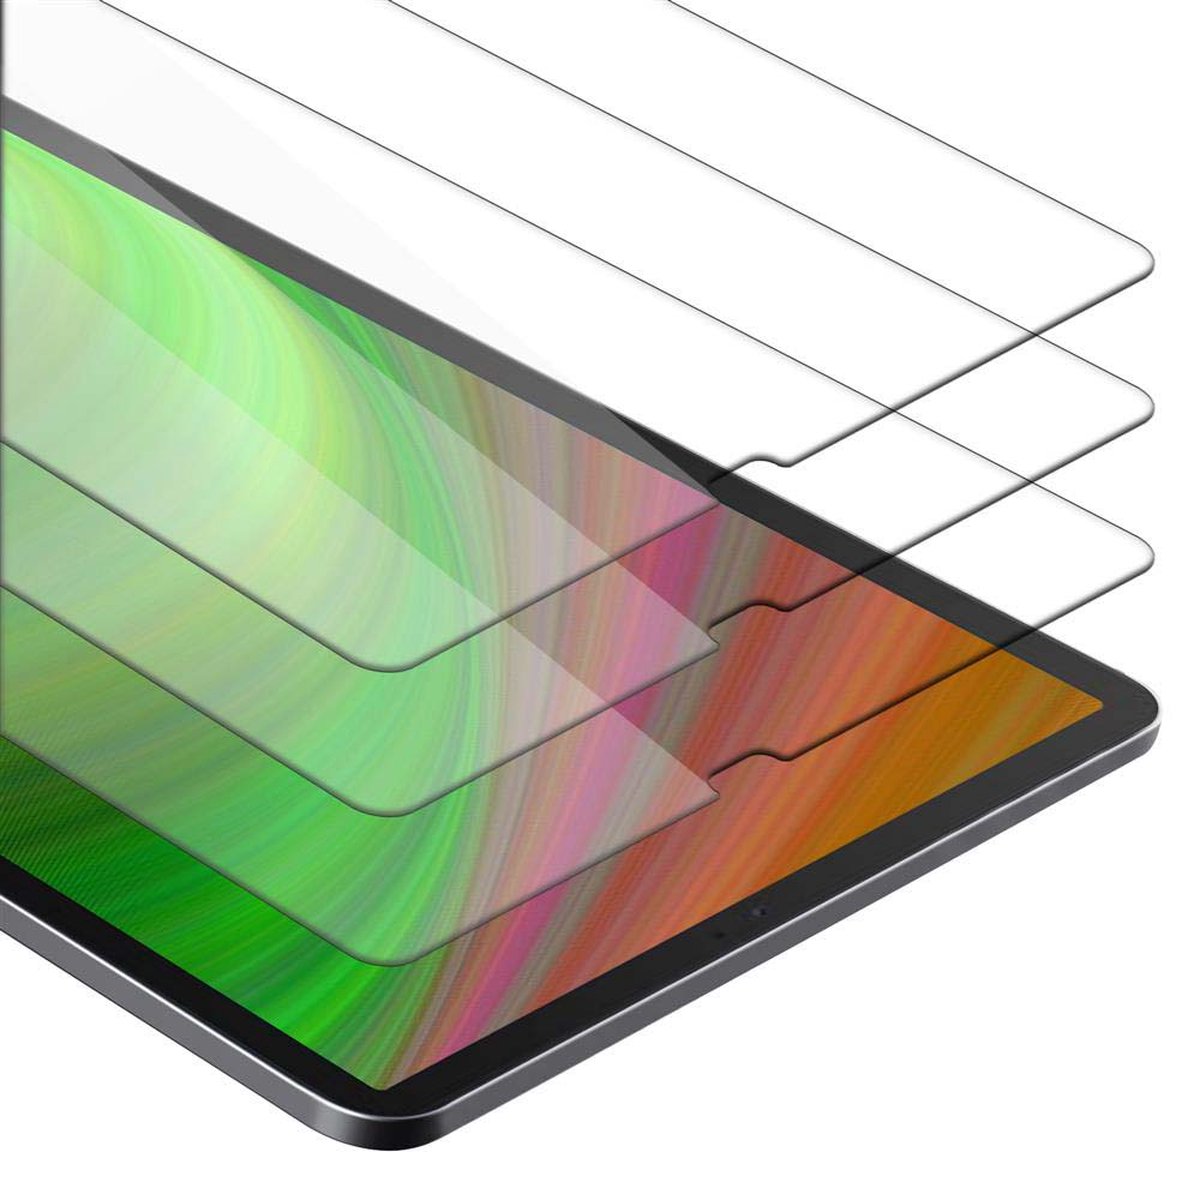 Cadorabo 3x Screenprotector voor Samsung Galaxy Tab S5e (10.5 inch) in KRISTALHELDER - Getemperd Pantser Film (Tempered) Display beschermend glas in 9H hardheid met 3D Touch